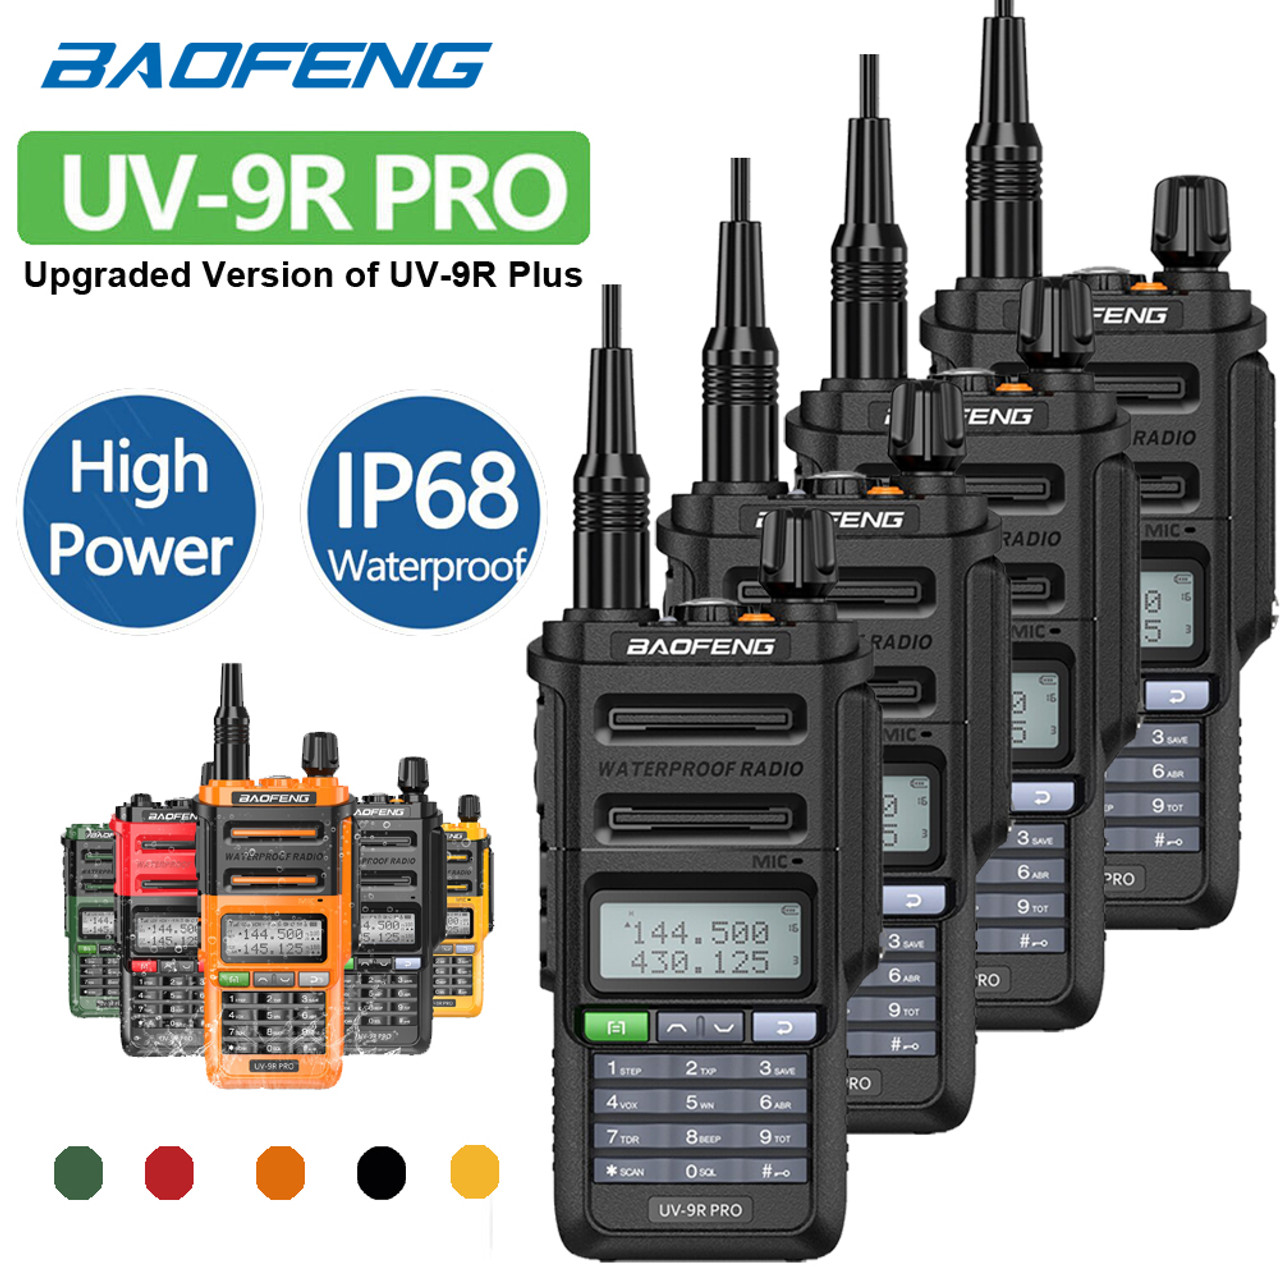 Baofeng UV-9R Pro V2 10W Tri Power IP 68